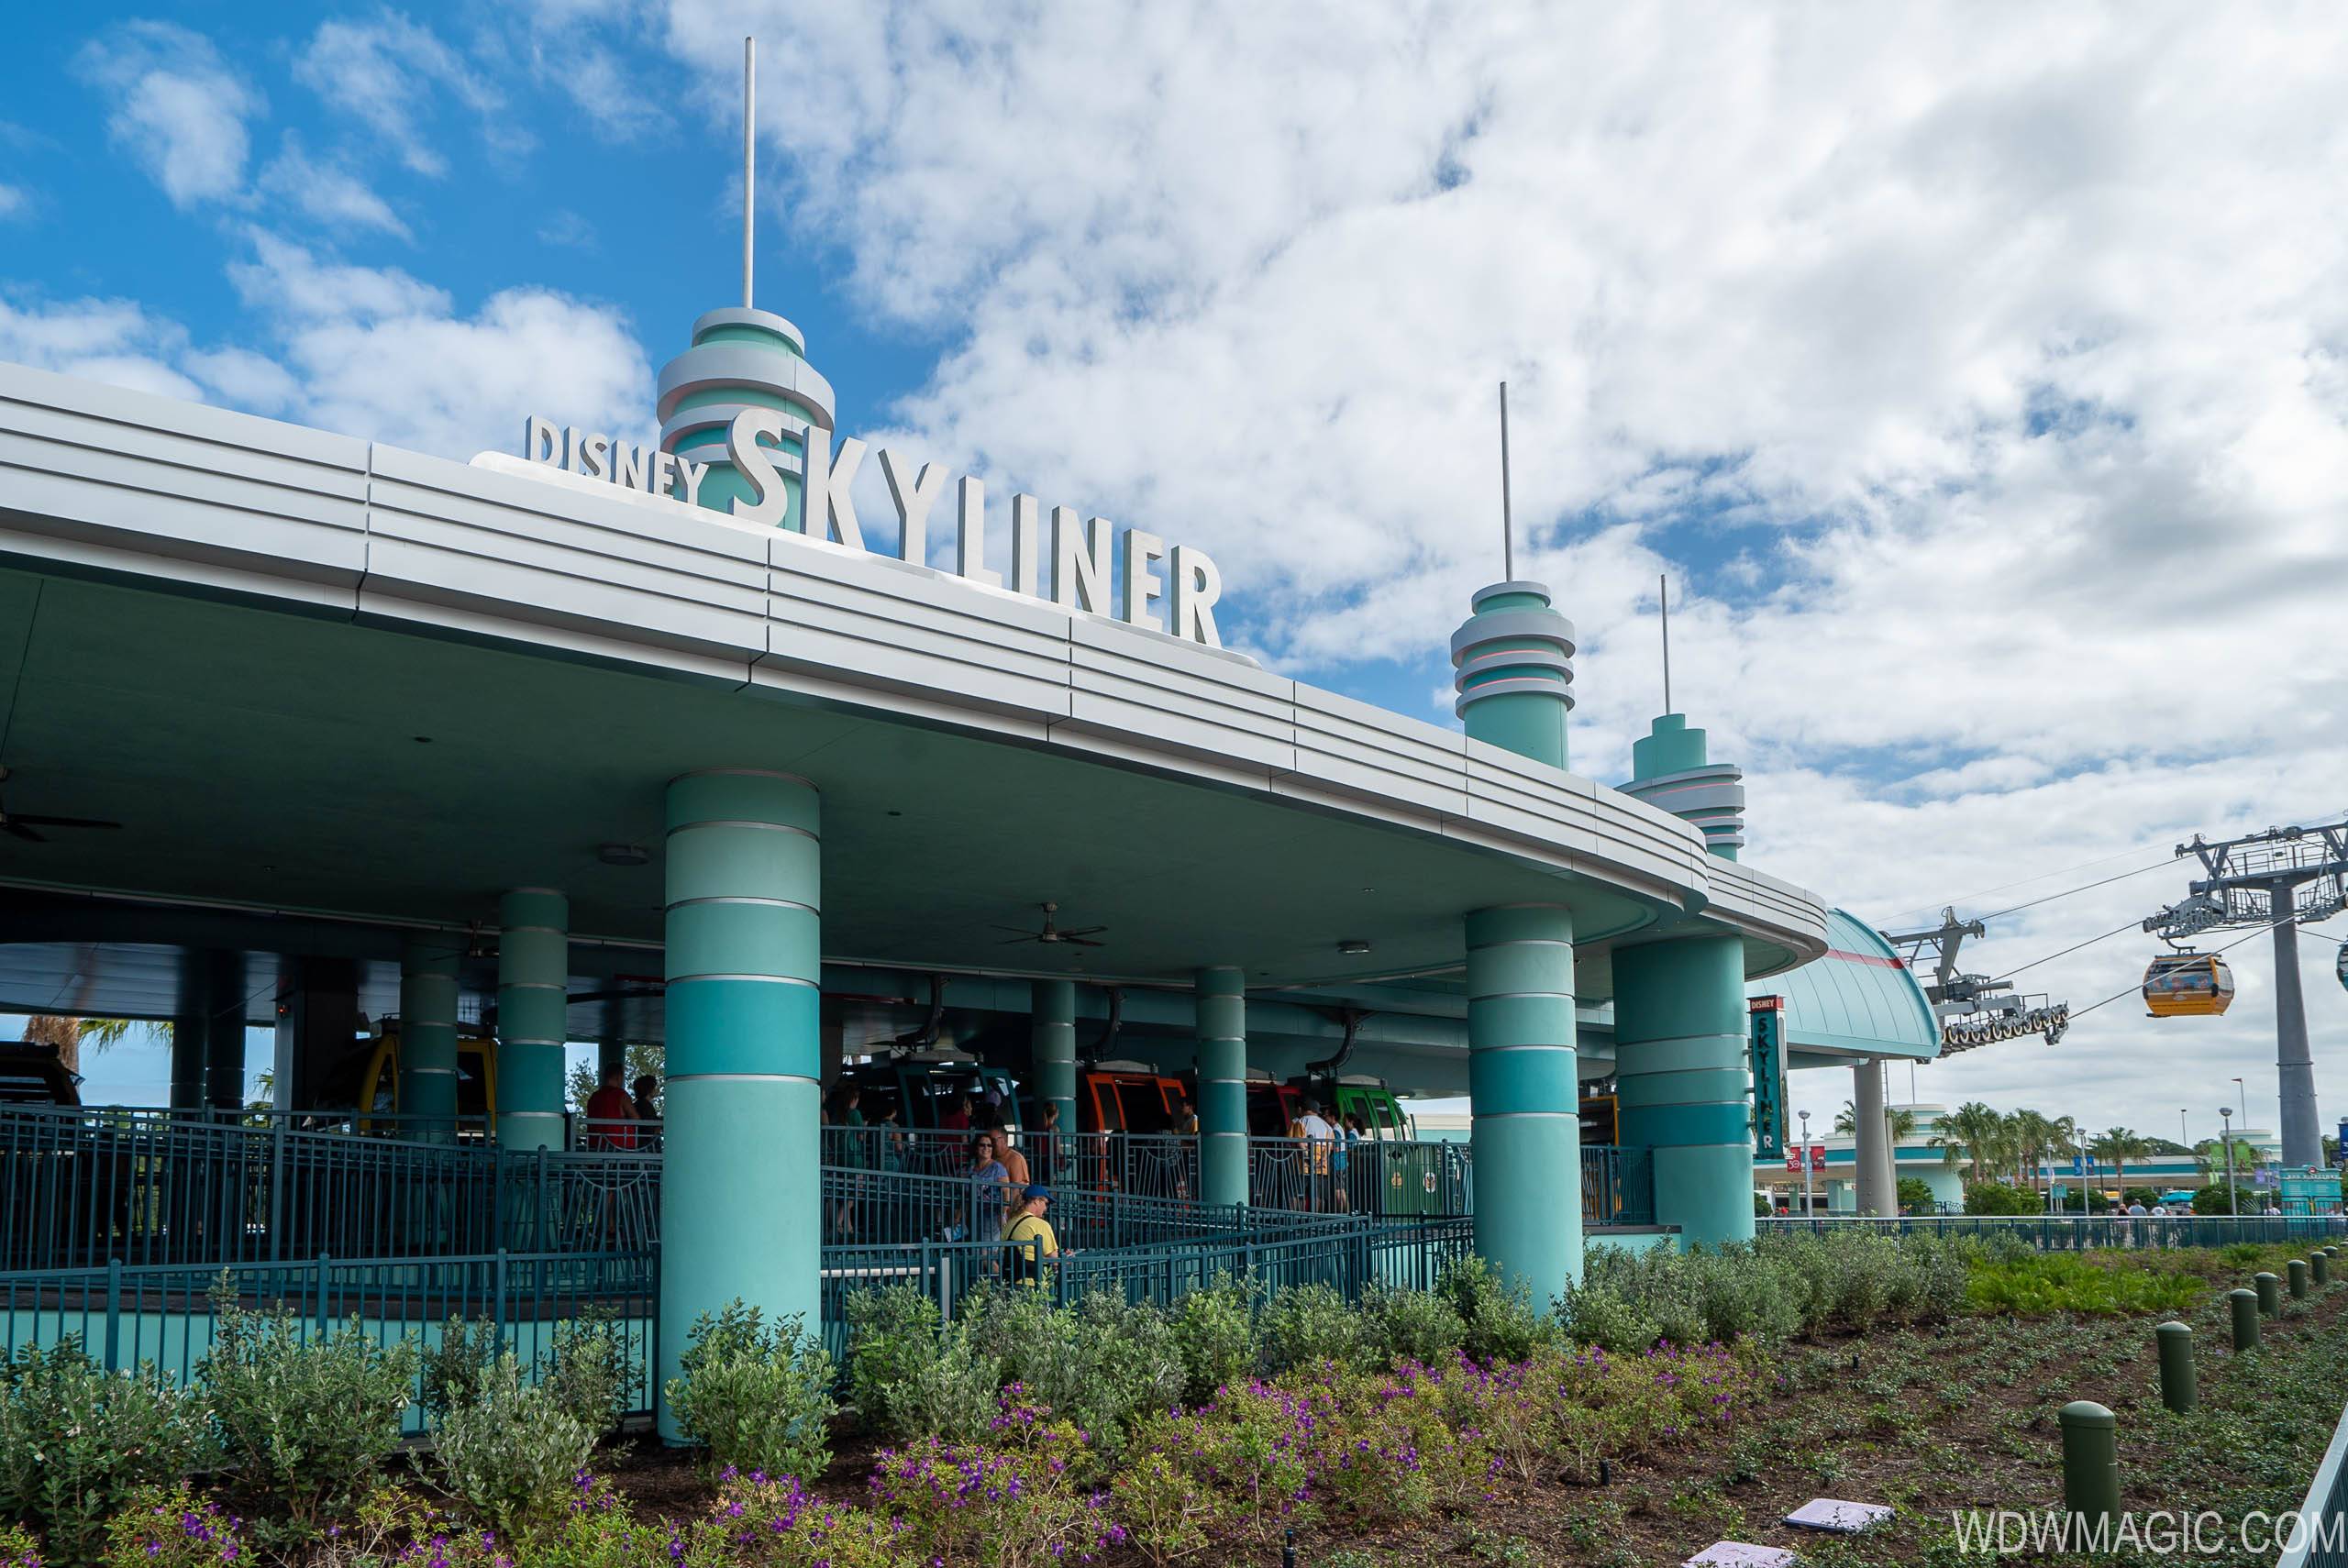 Disney Skyliner opening set for late 2019